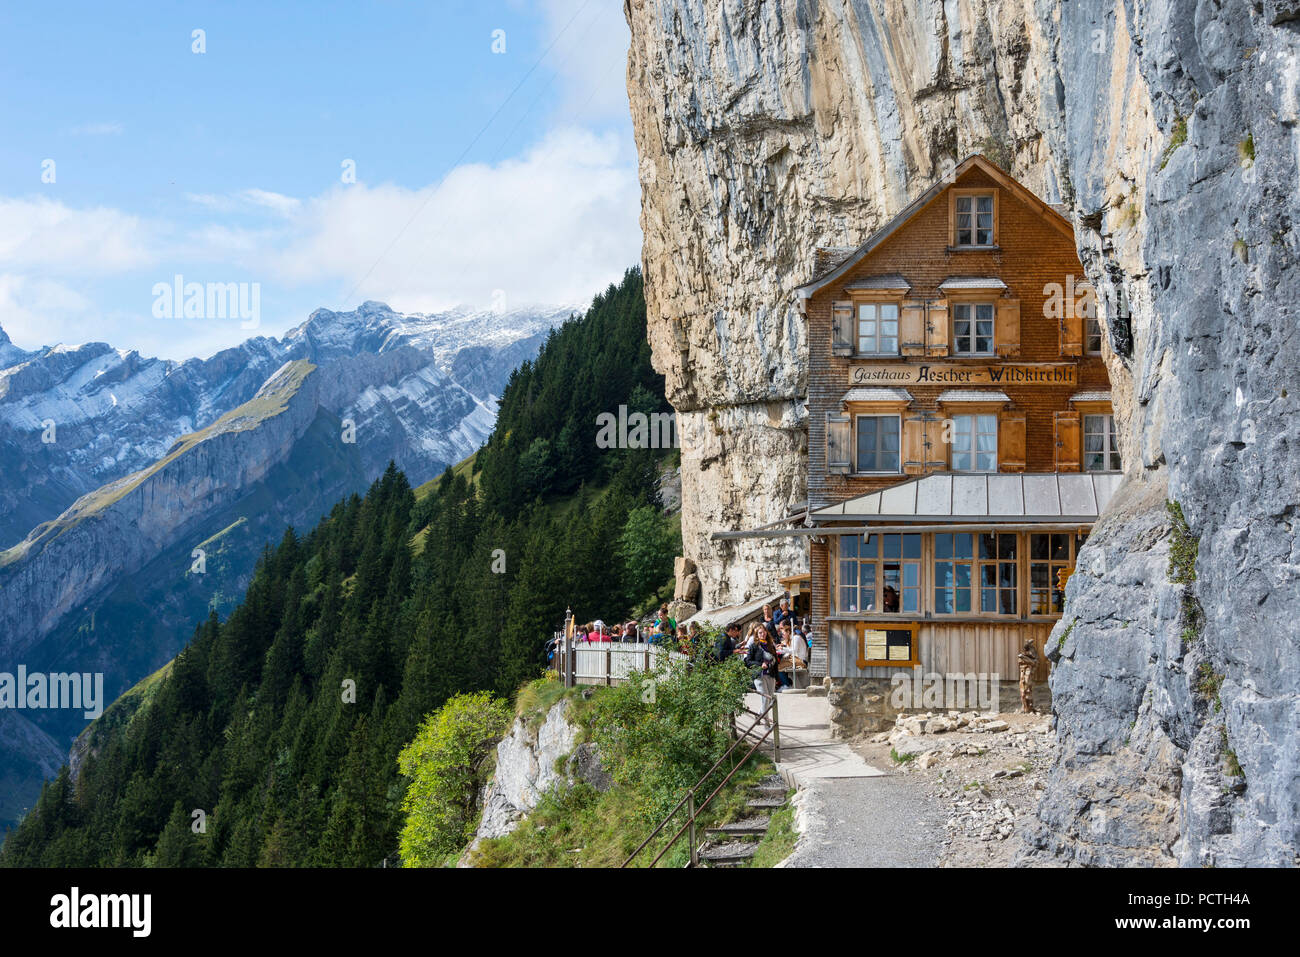 Mountain inn Aescher-Wildkirchli, Alpstein area, Canton Appenzell,  Switzerland Stock Photo - Alamy